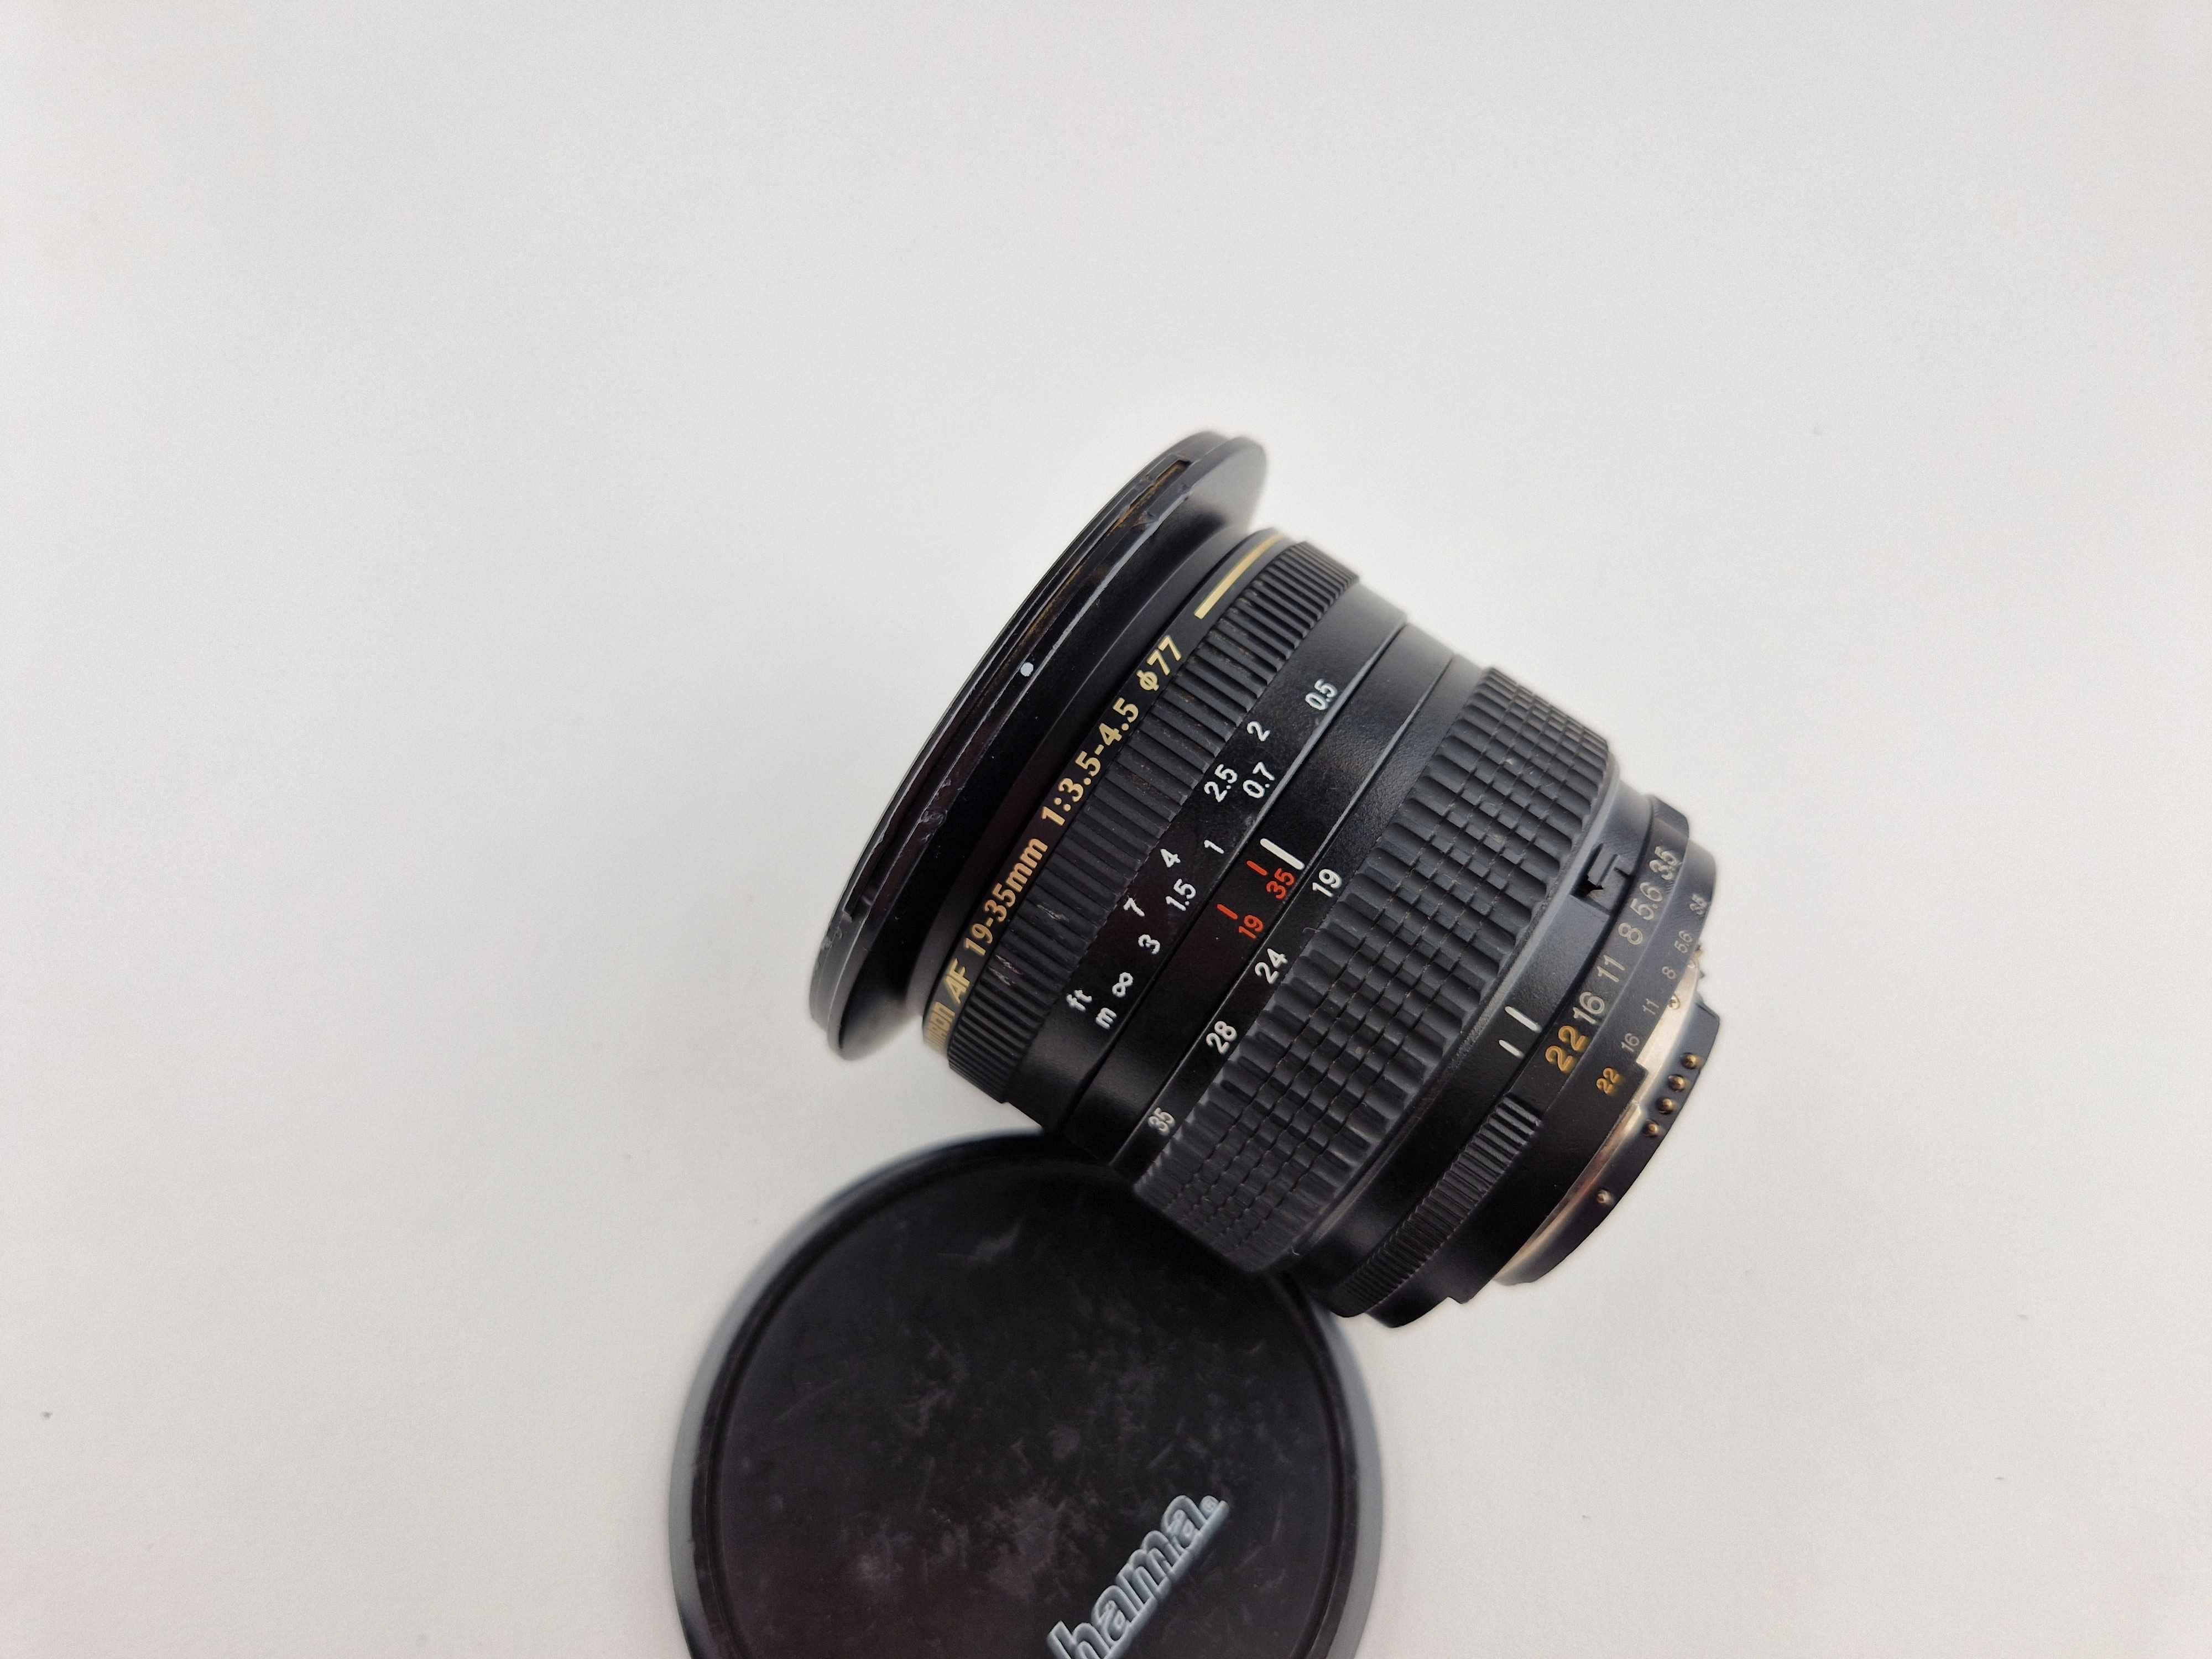 .Obiektyw Tamron 19-35mm 1:3.5-4.5 AF do Nikon